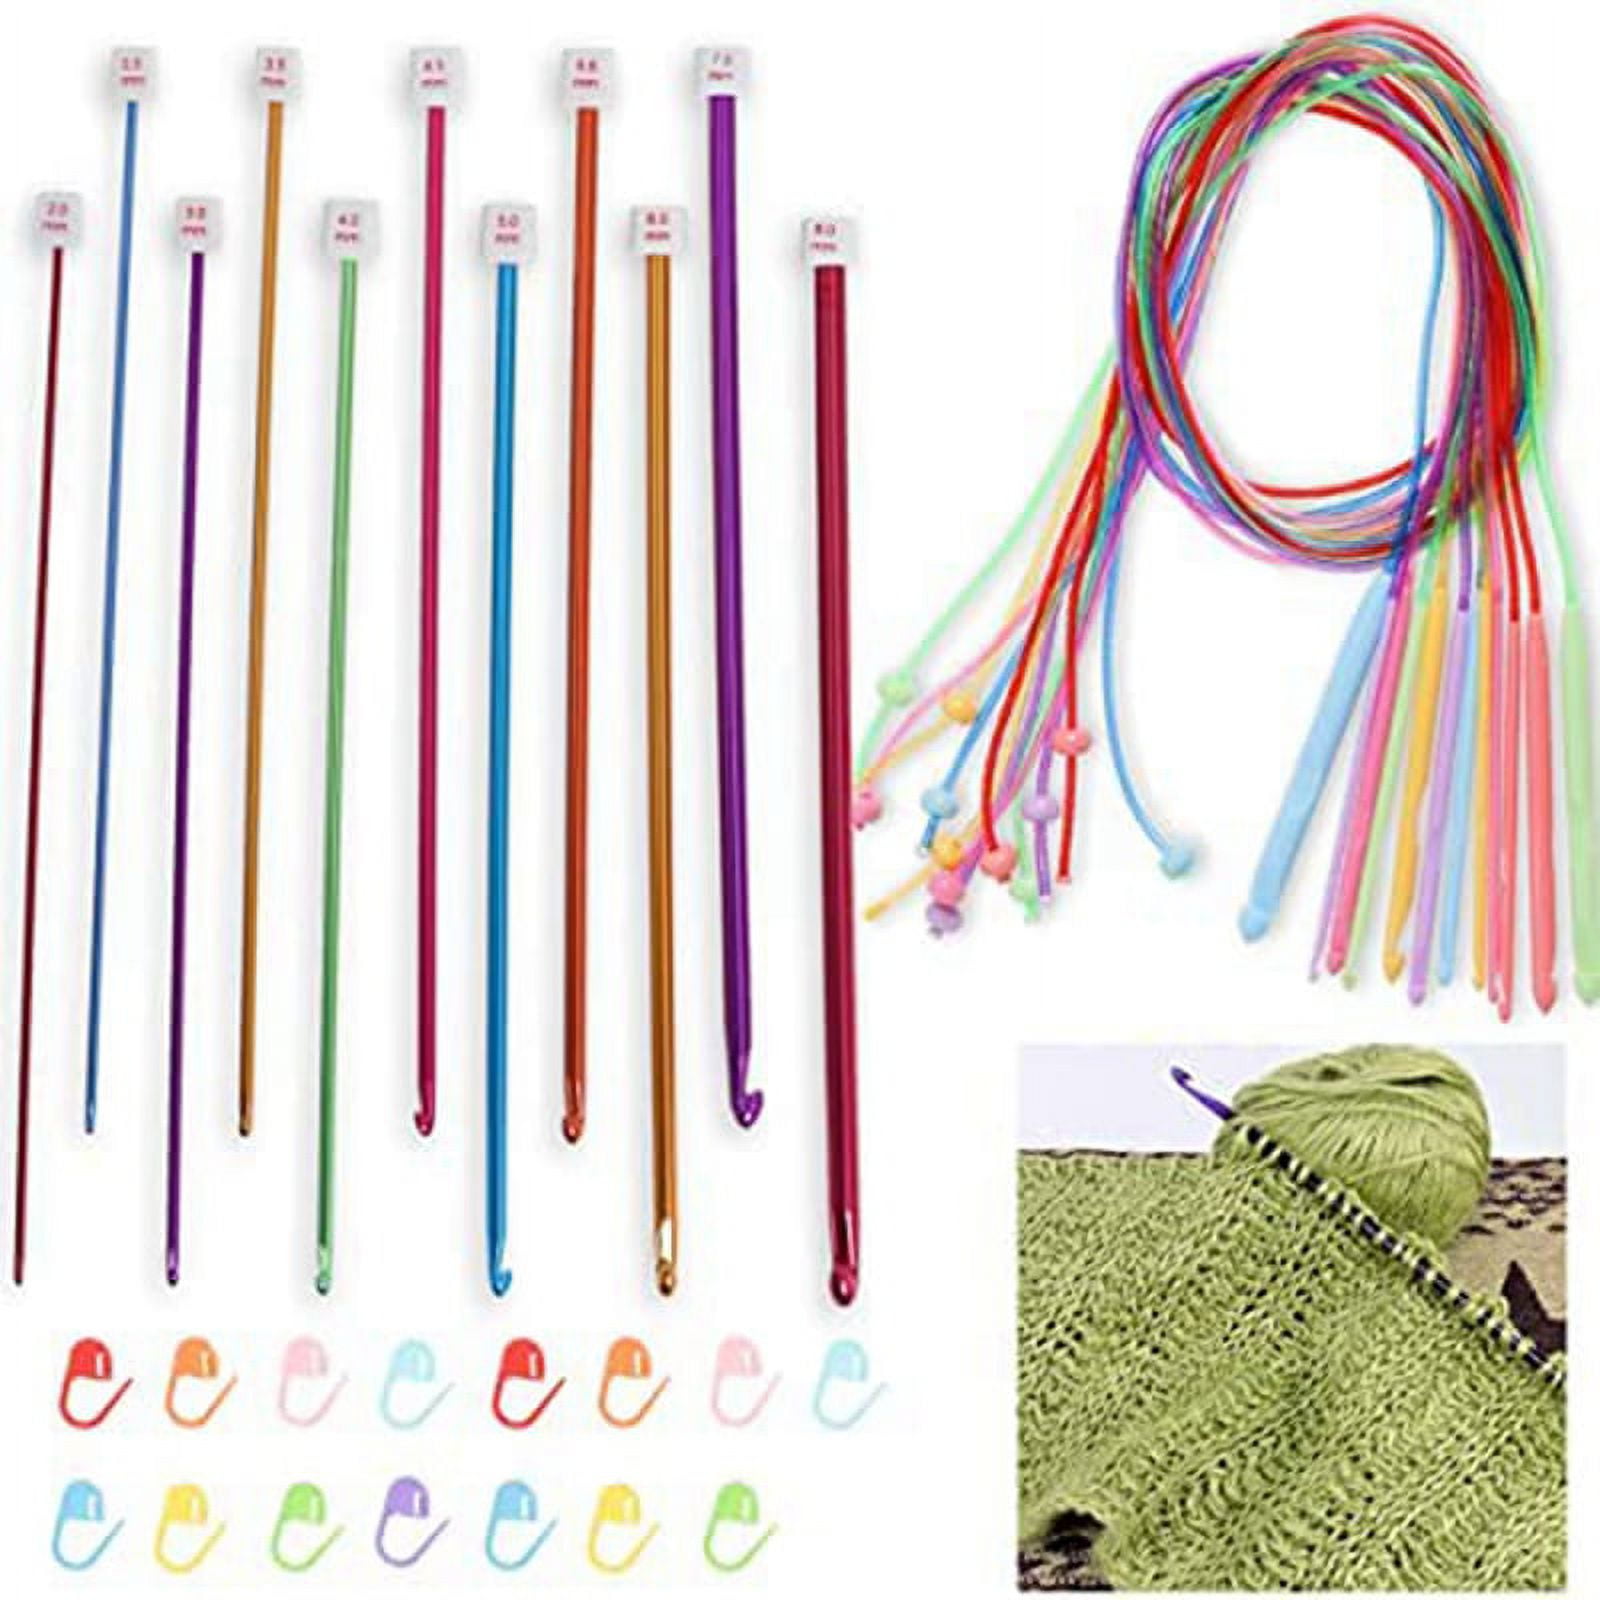 QJH Aluminum Long Crochet Hook Set, 11pcs Tunisian Crochet Hooks Multicolor  Afghan Crochet Needles for Crocheting (2mm to 8mm)